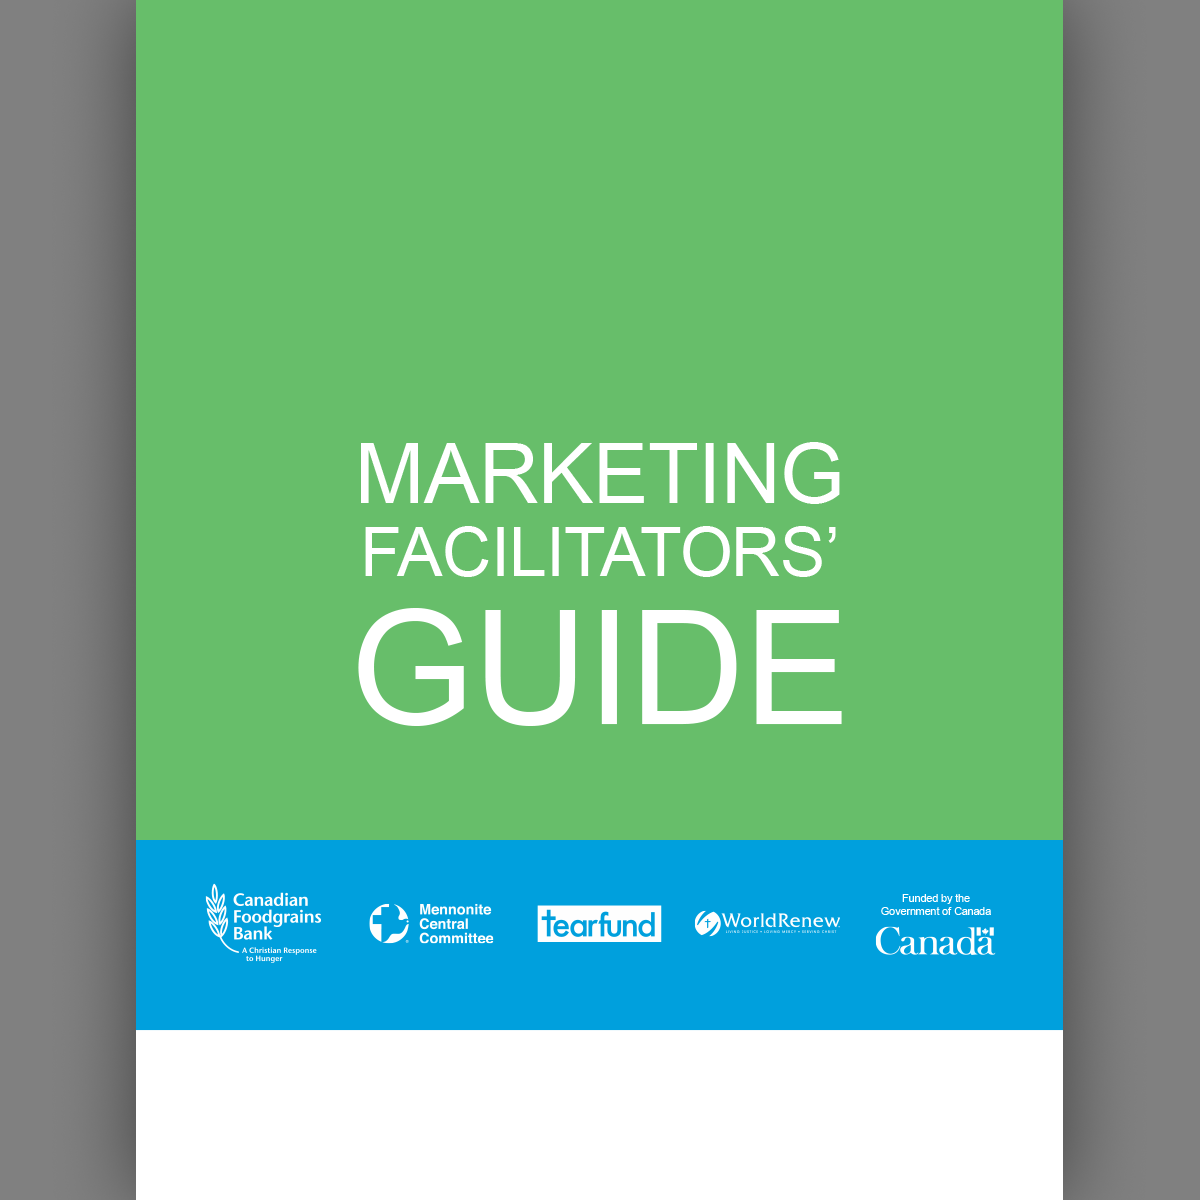 https://foodgrainsbank.ca/wp-content/uploads/2020/11/SUCA-Marketing-Facilitators-Guide-2020-square.png